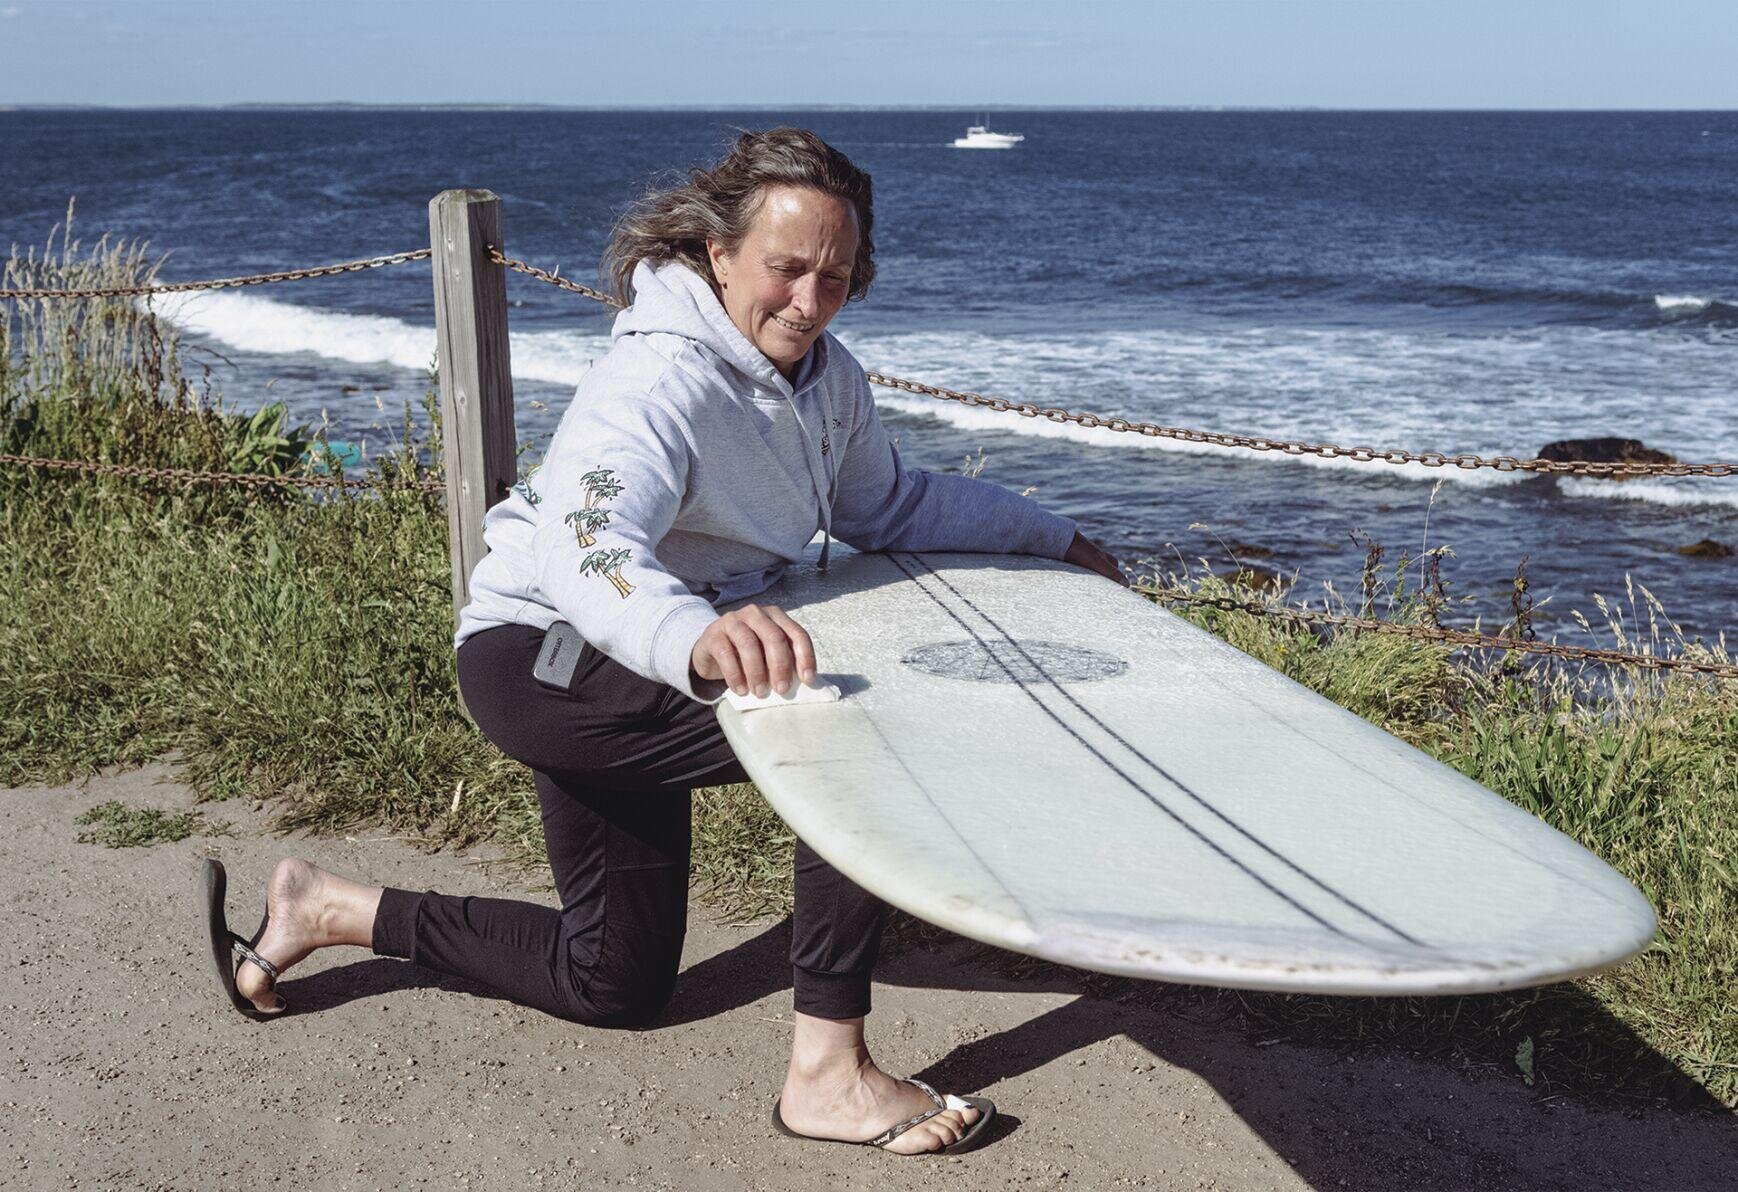 woman wipes a surfboard